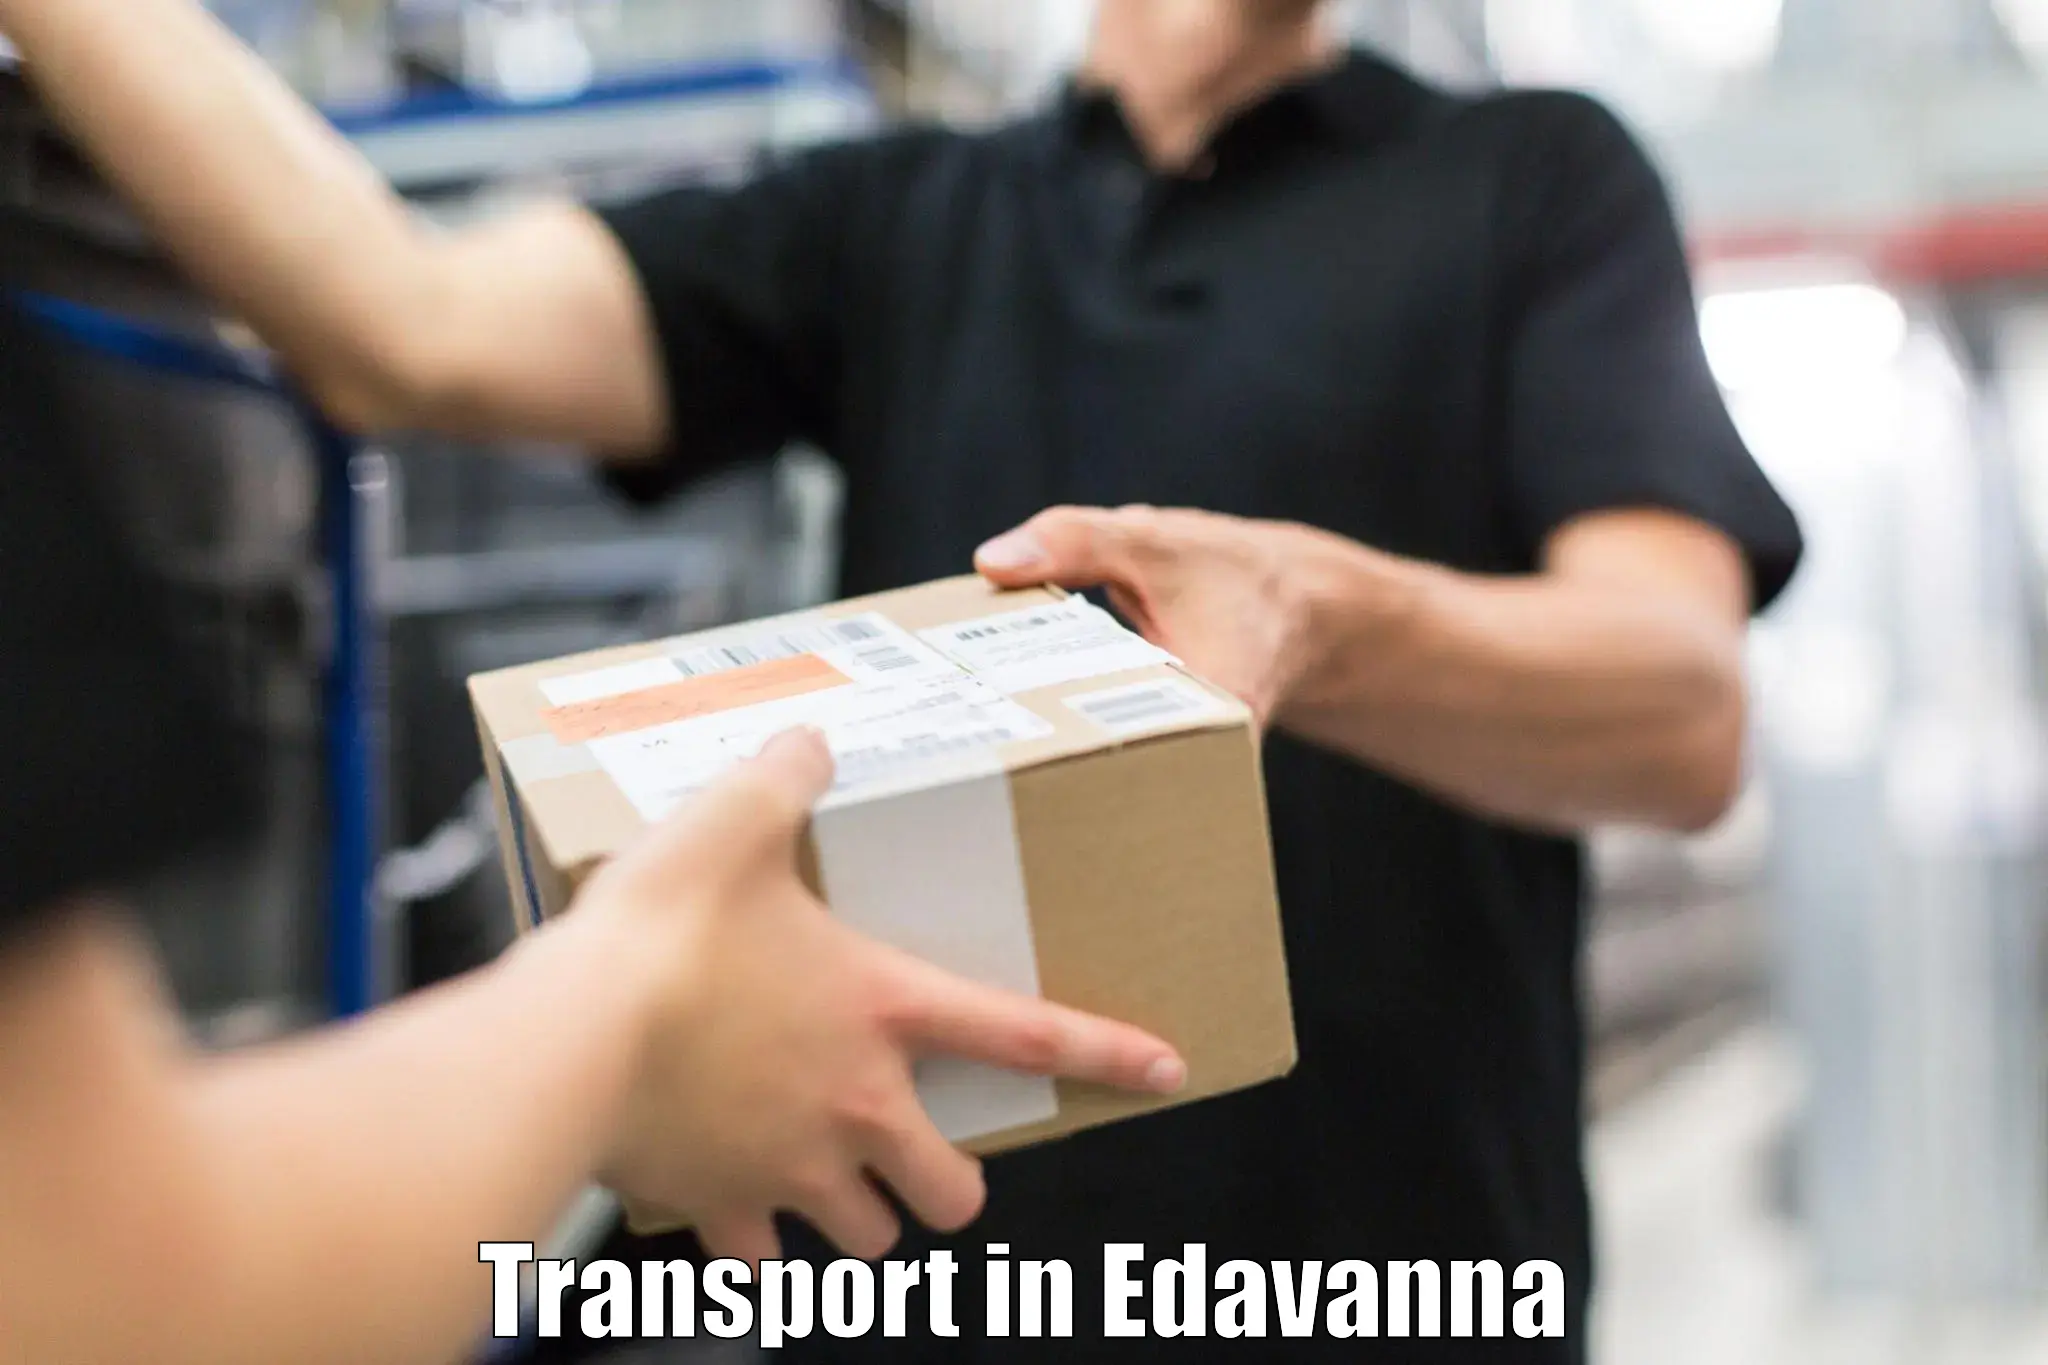 Cargo transportation services in Edavanna